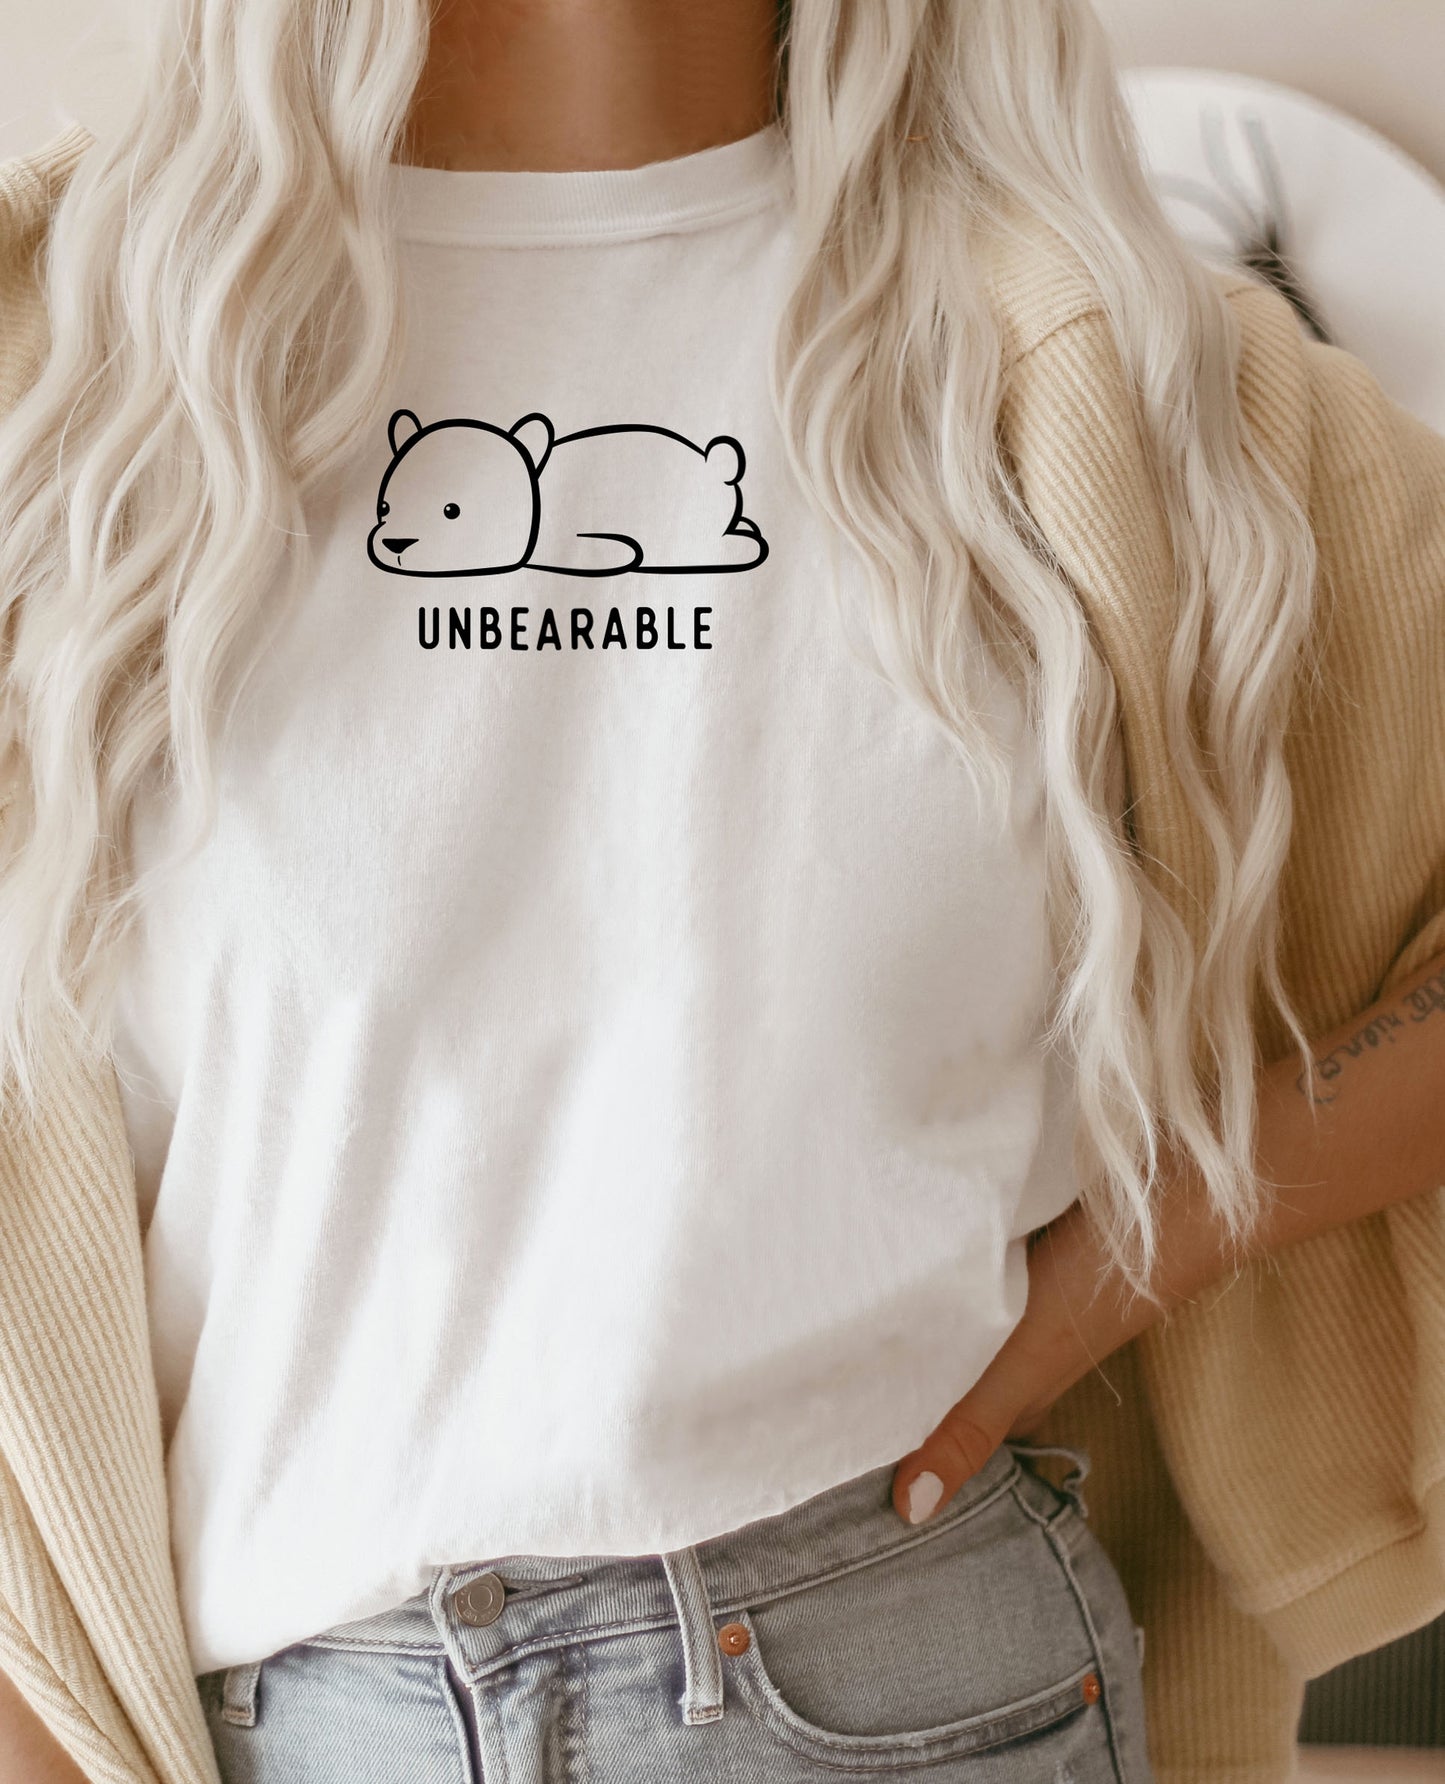 Unbearable - White Tee